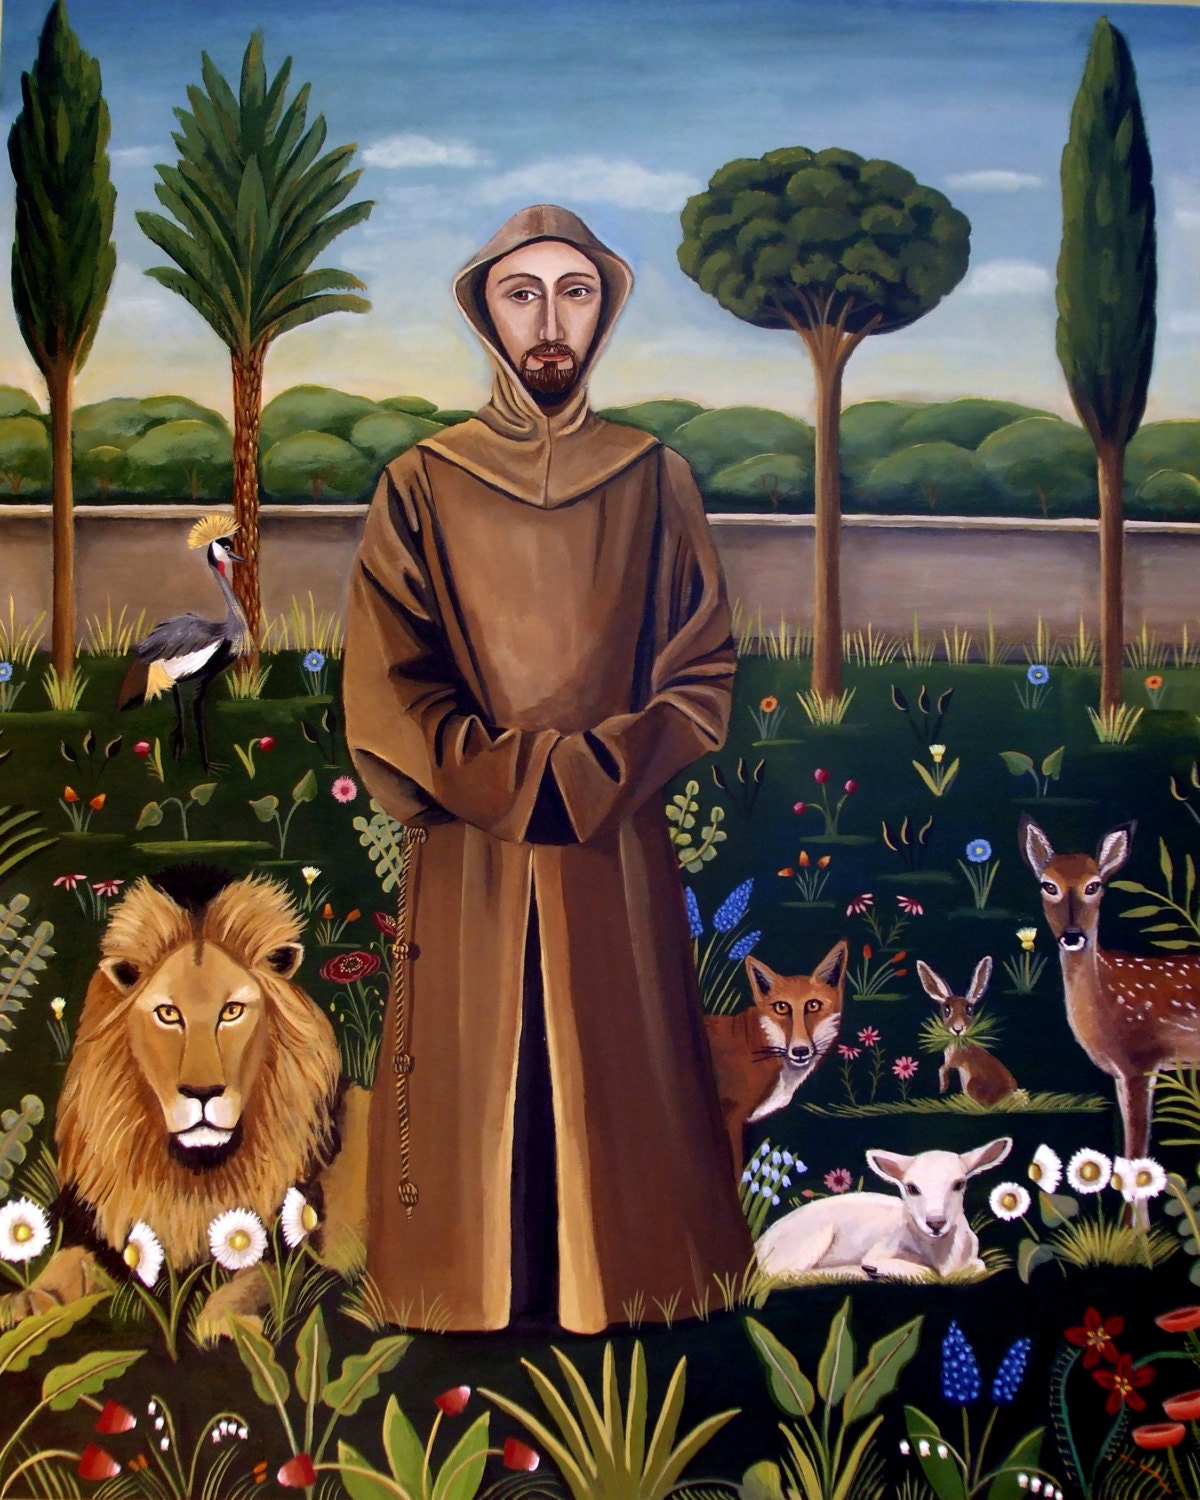 St. Francis of Assisi Catholic Saint Art Print Patron Saint -  Israel